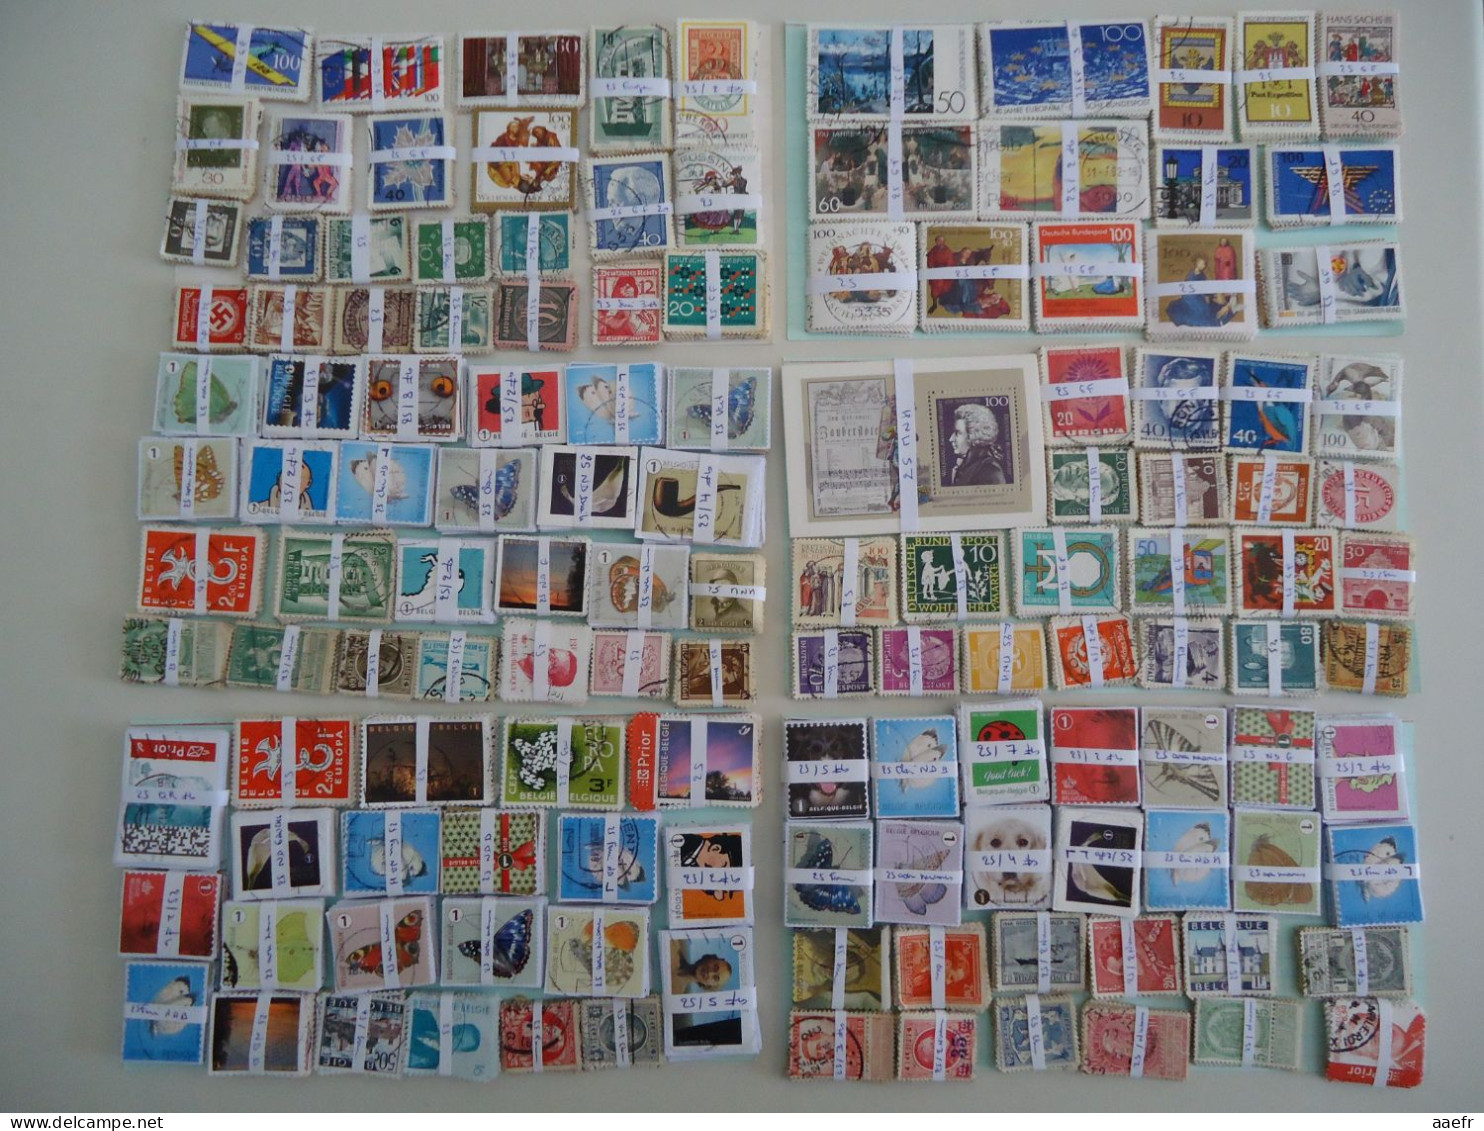 Monde / World - 11250 Timbres En 450 Bottes De 25  / 11250 Stamps In 450 Bundles Of 25 - Kilowaar (min. 1000 Zegels)